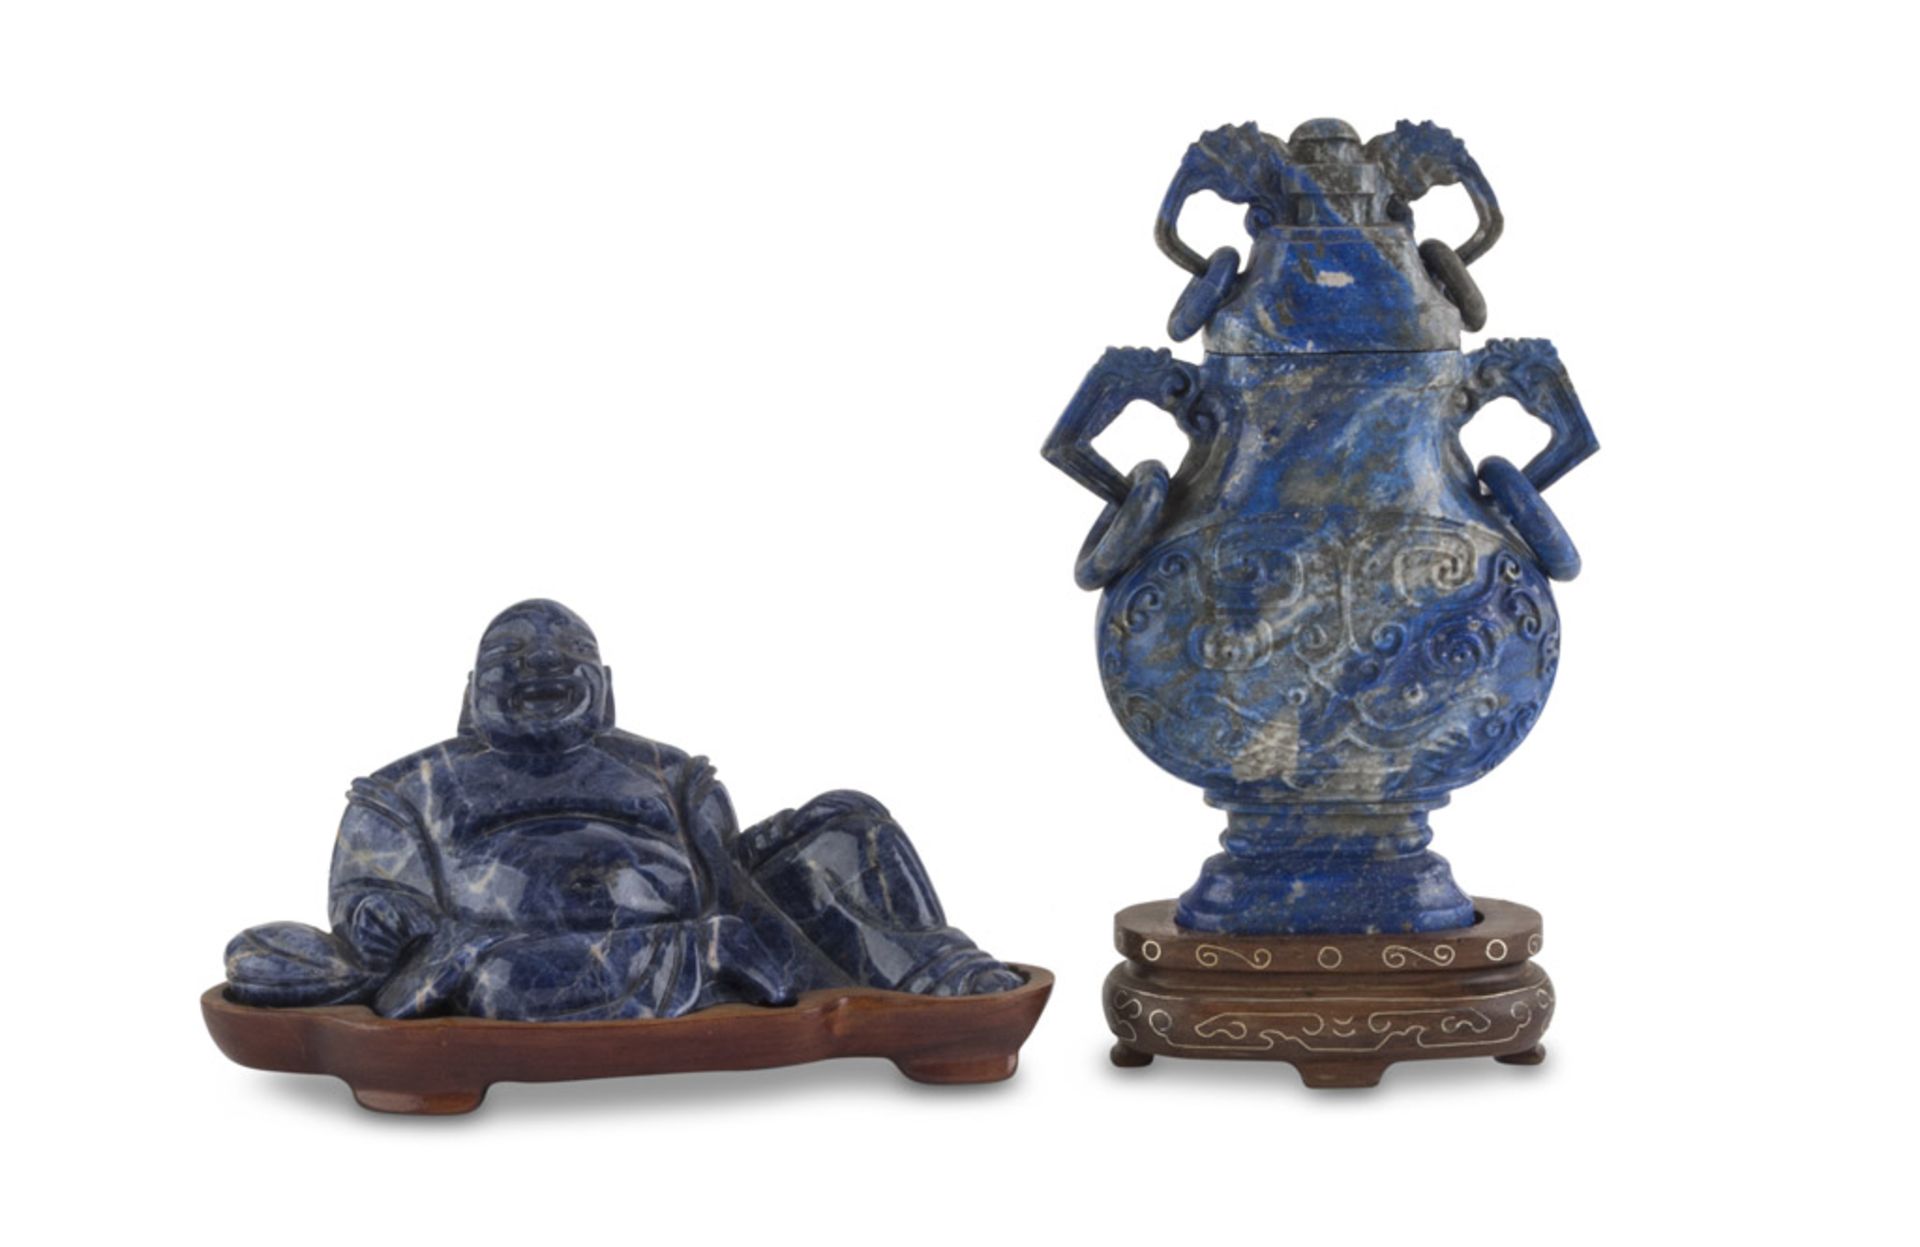 A SODALITE SCULPTURE AND A LAPIS LAZULI VASE, CHINA 20TH CENTURY the sculpture representing Budai.